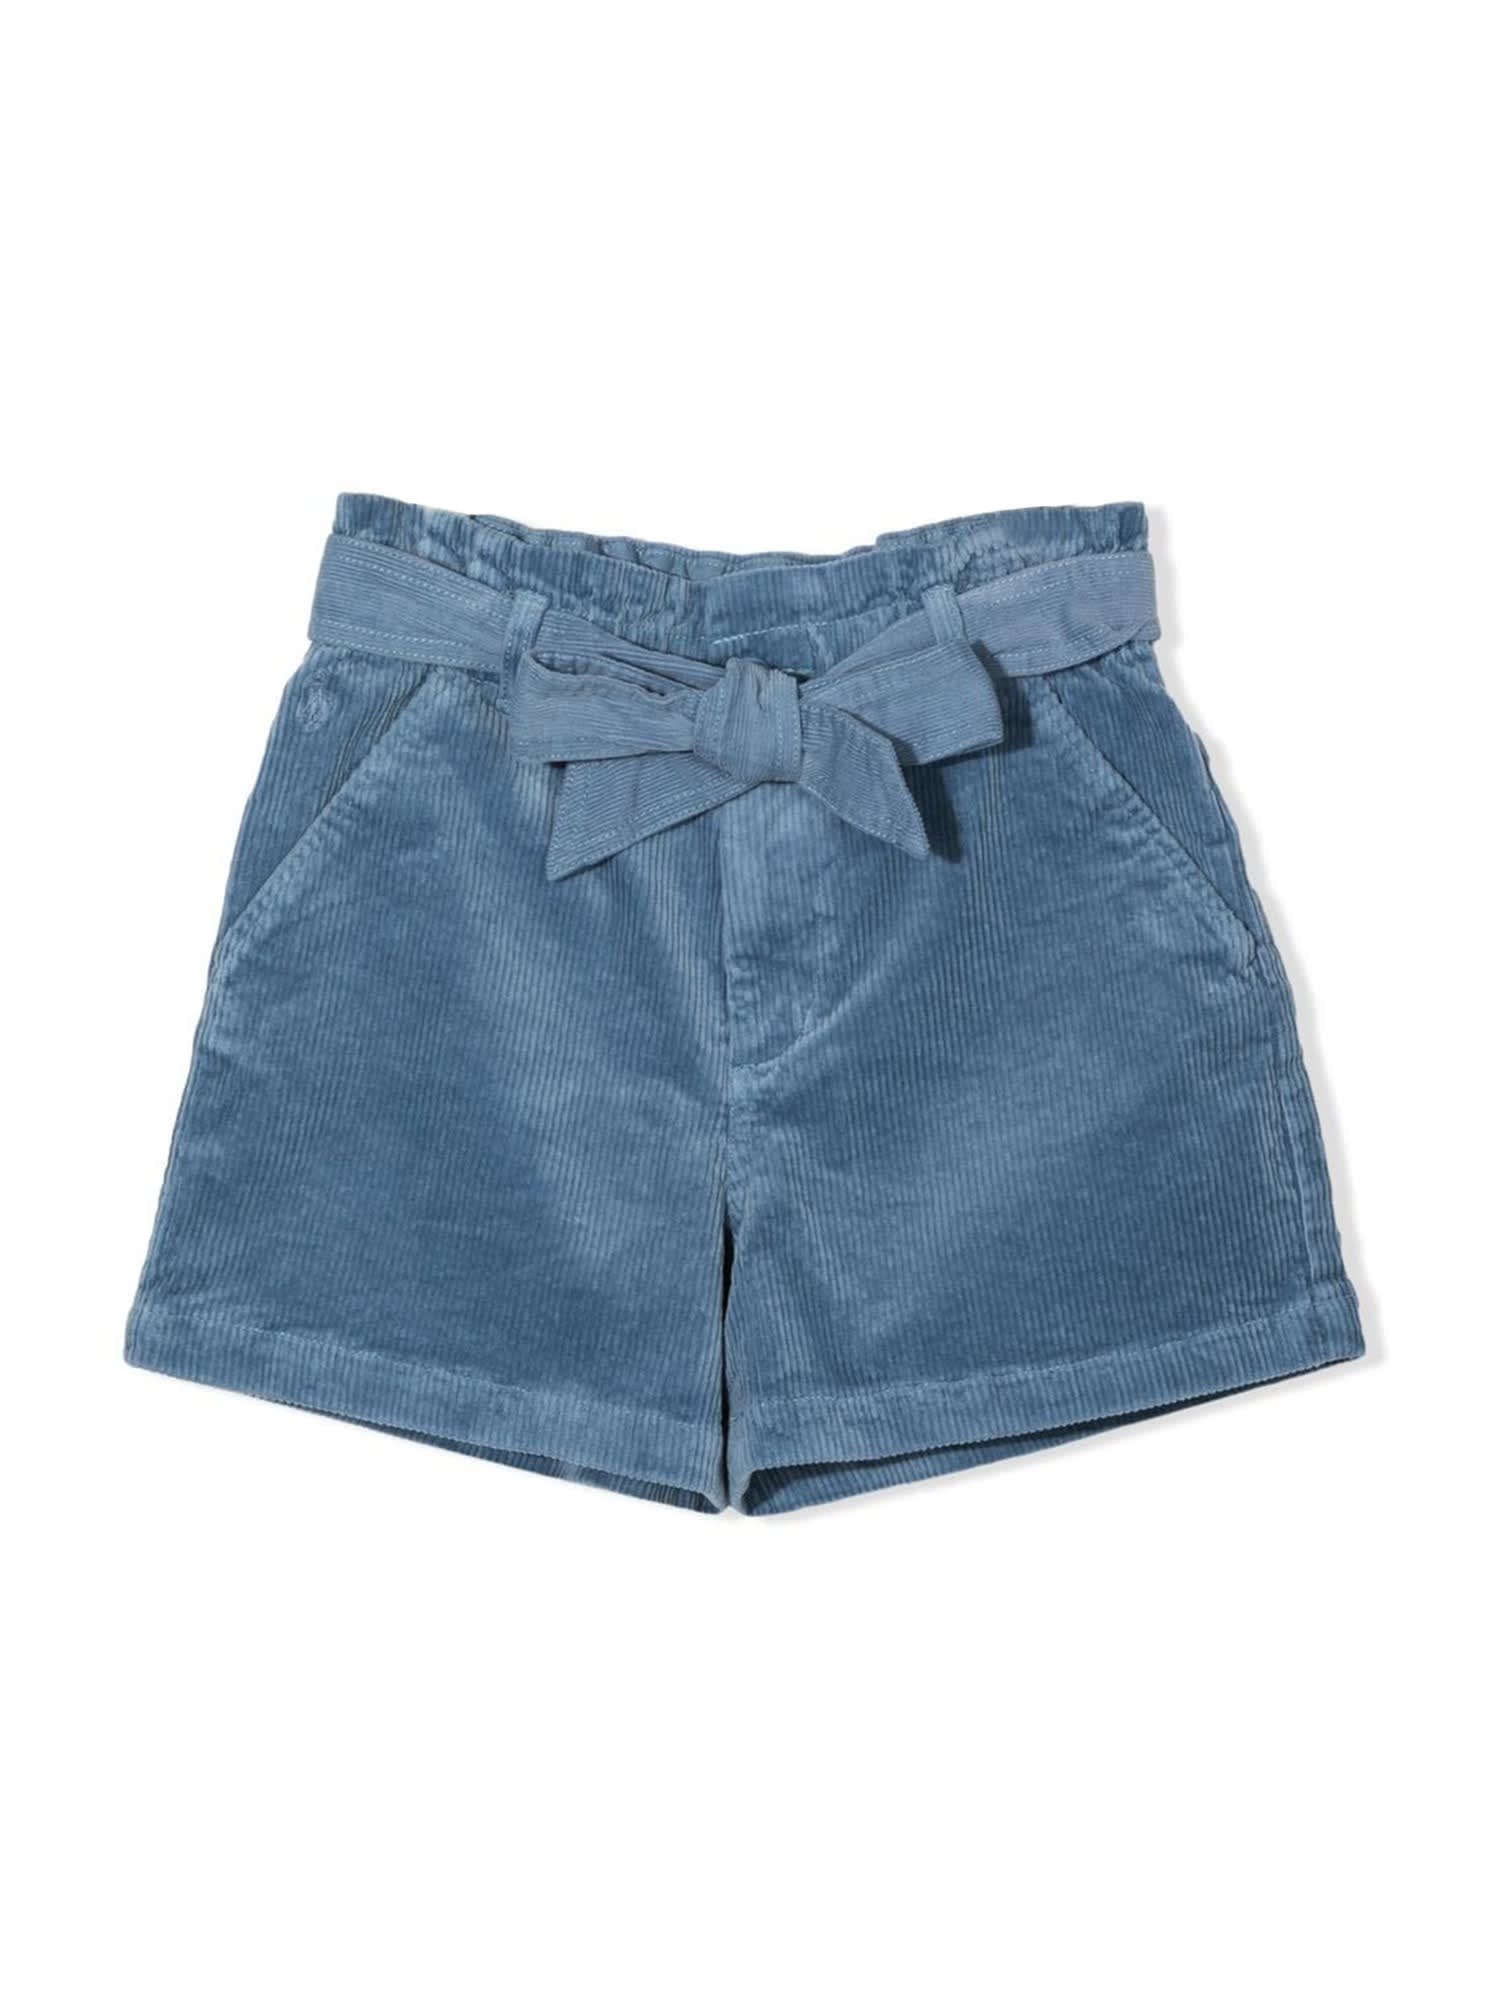 Ralph Lauren Paperbag Shorts Flat Front